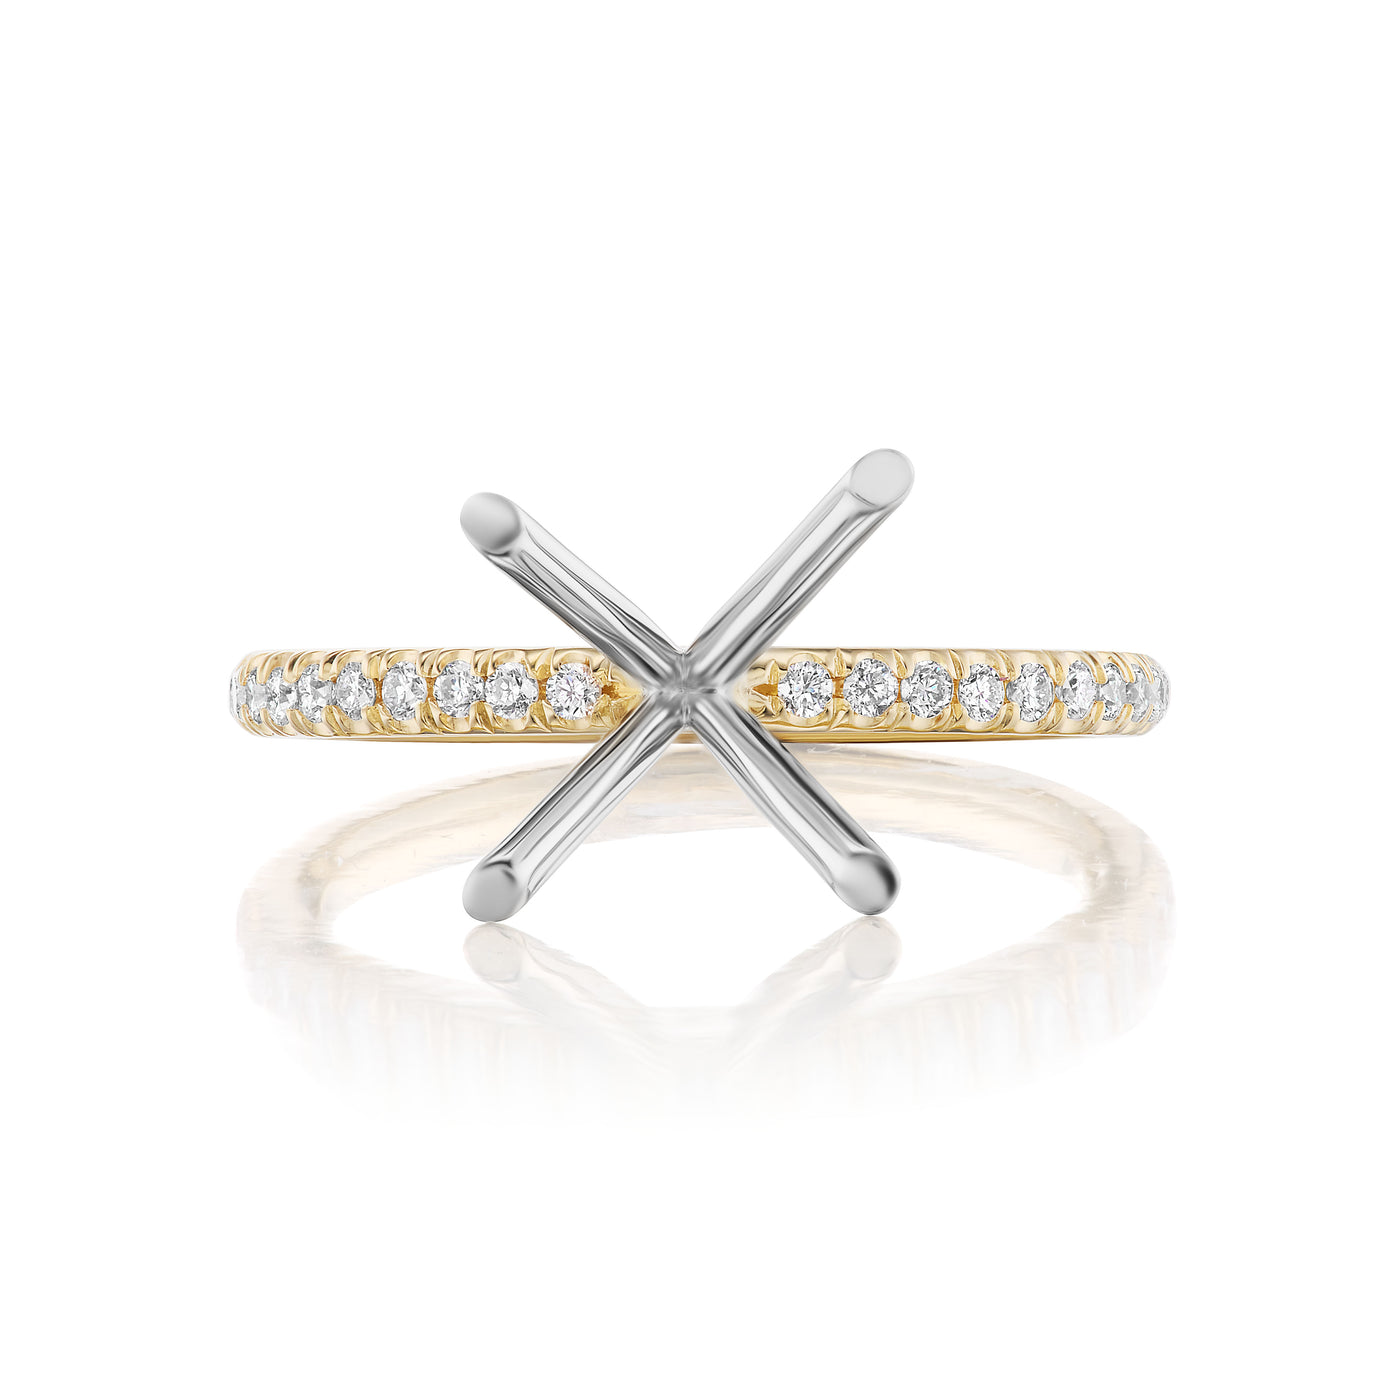 4 Prong Thin Rounded Diamond Shank Engagement Ring Setting